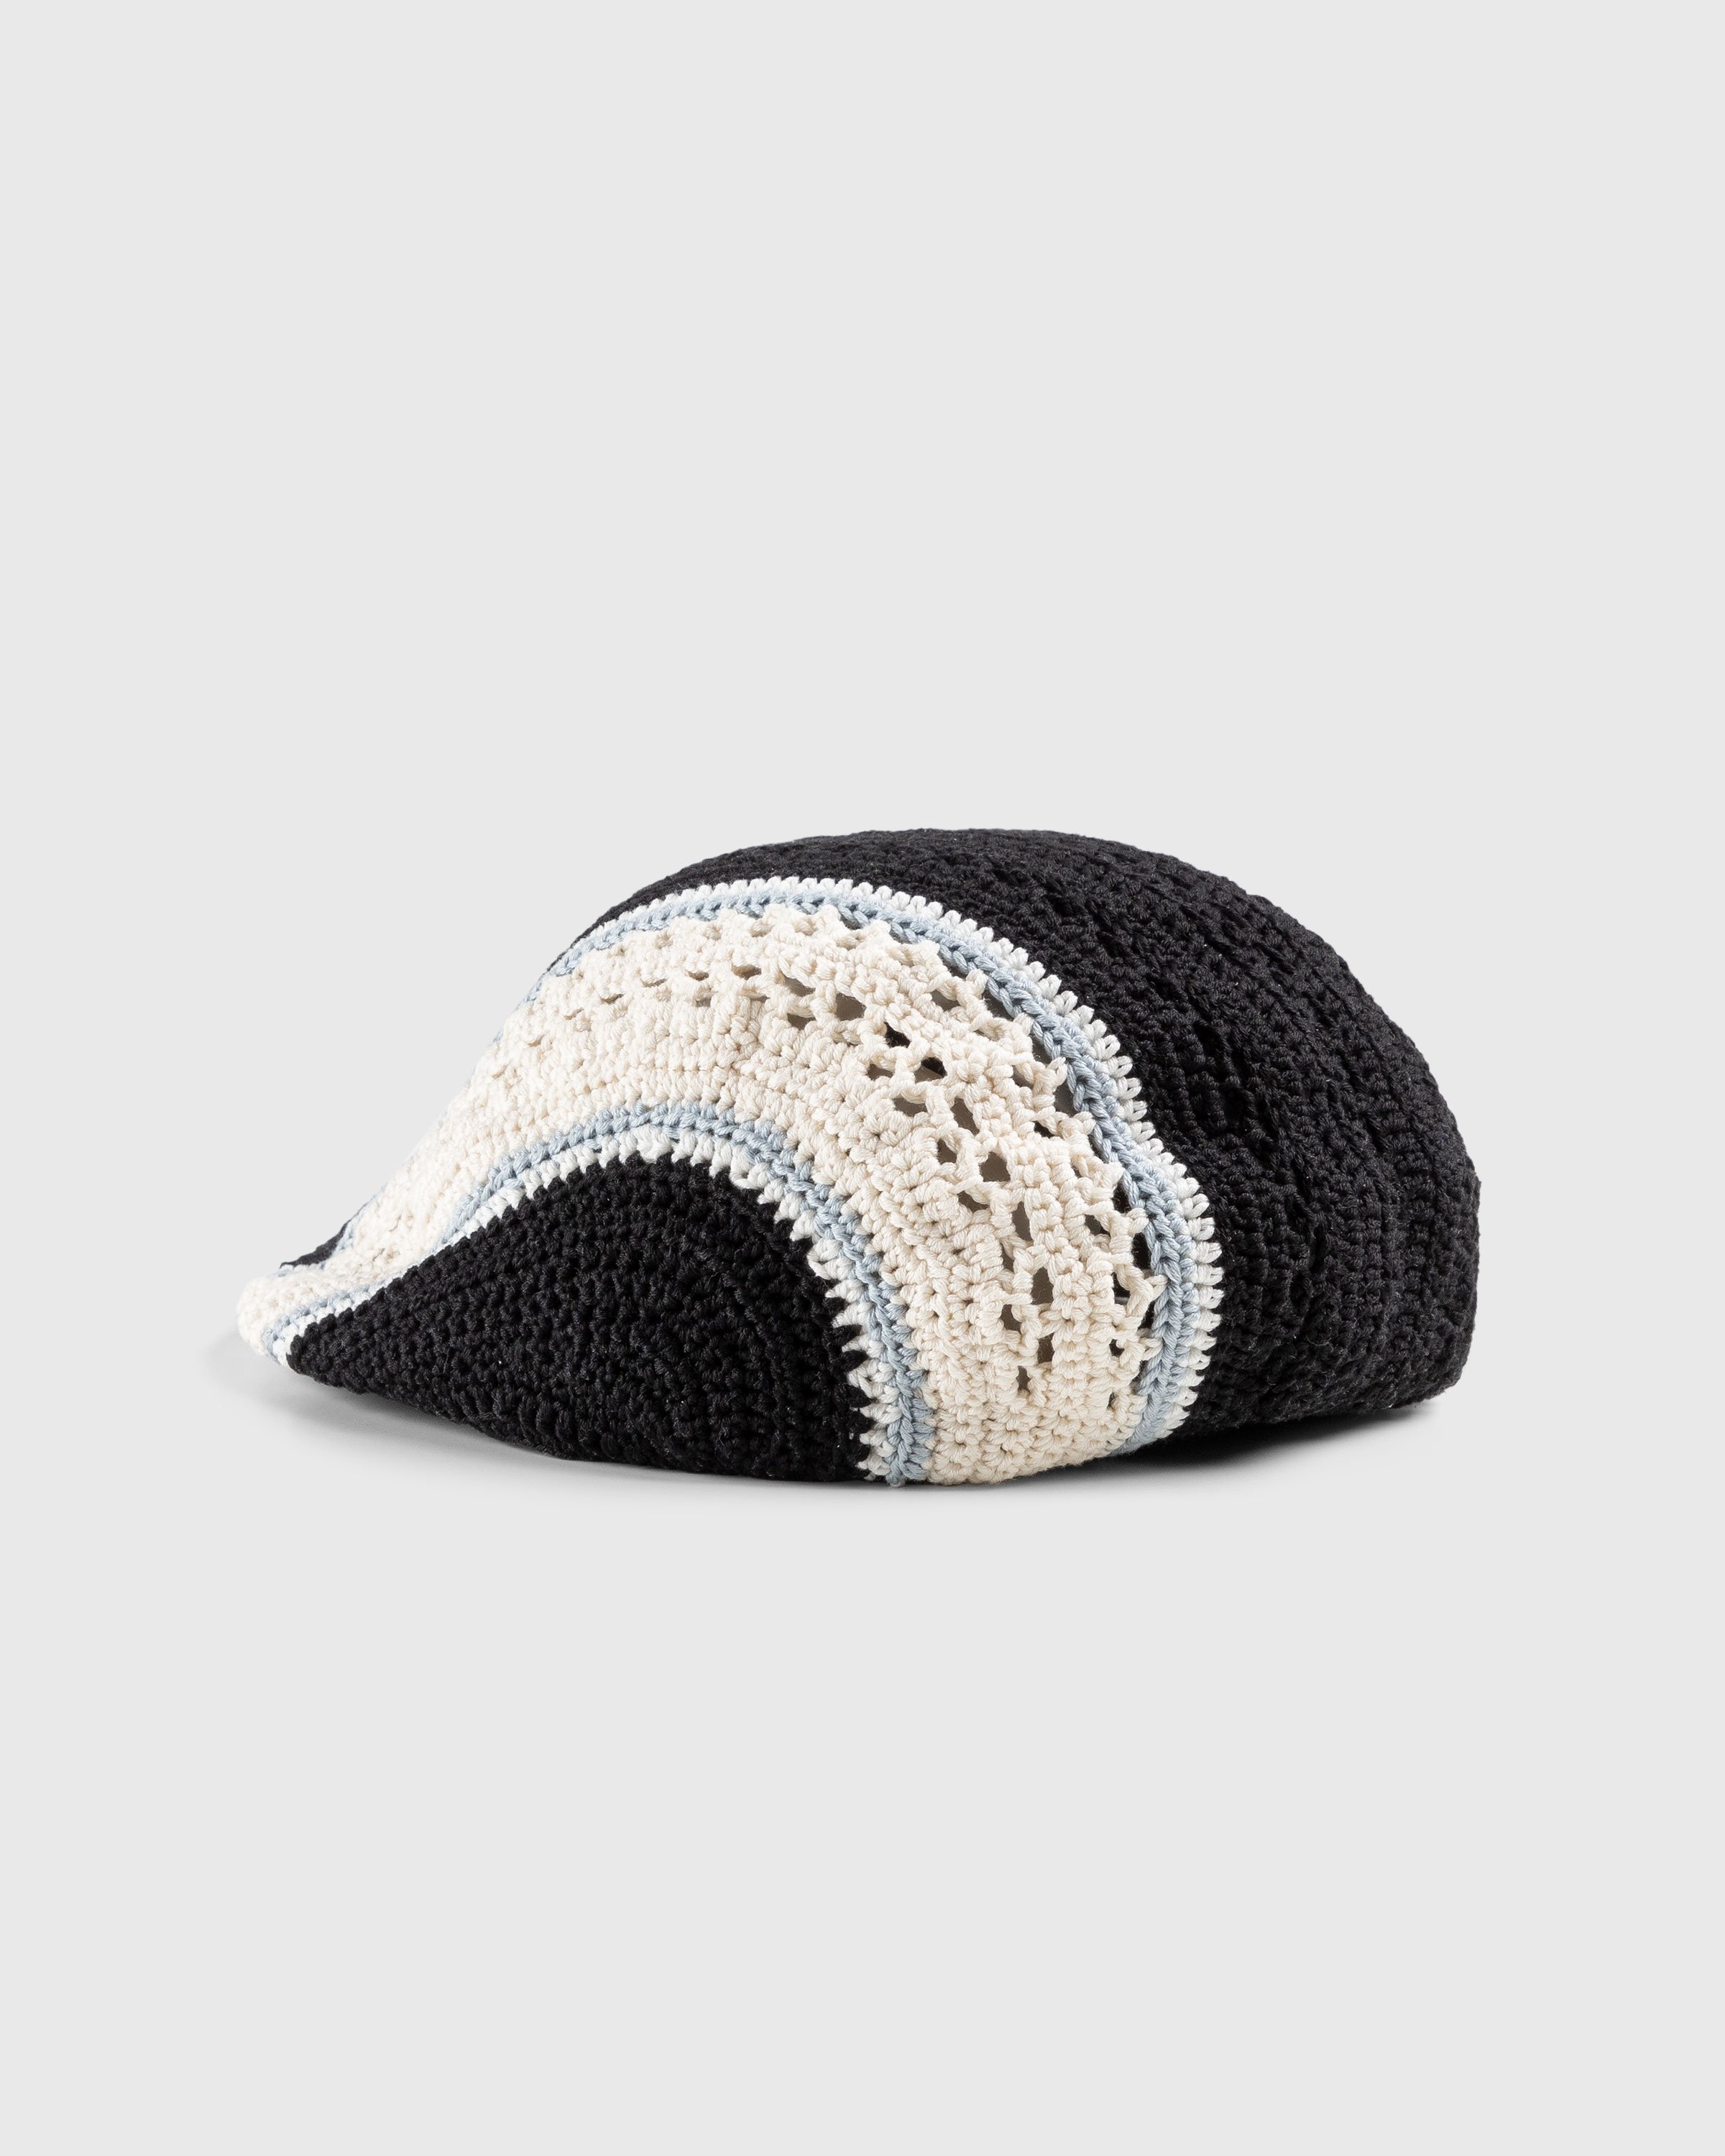 SSU – Crochet Flat Hat Black/Ivory - Flat Caps - Black - Image 3